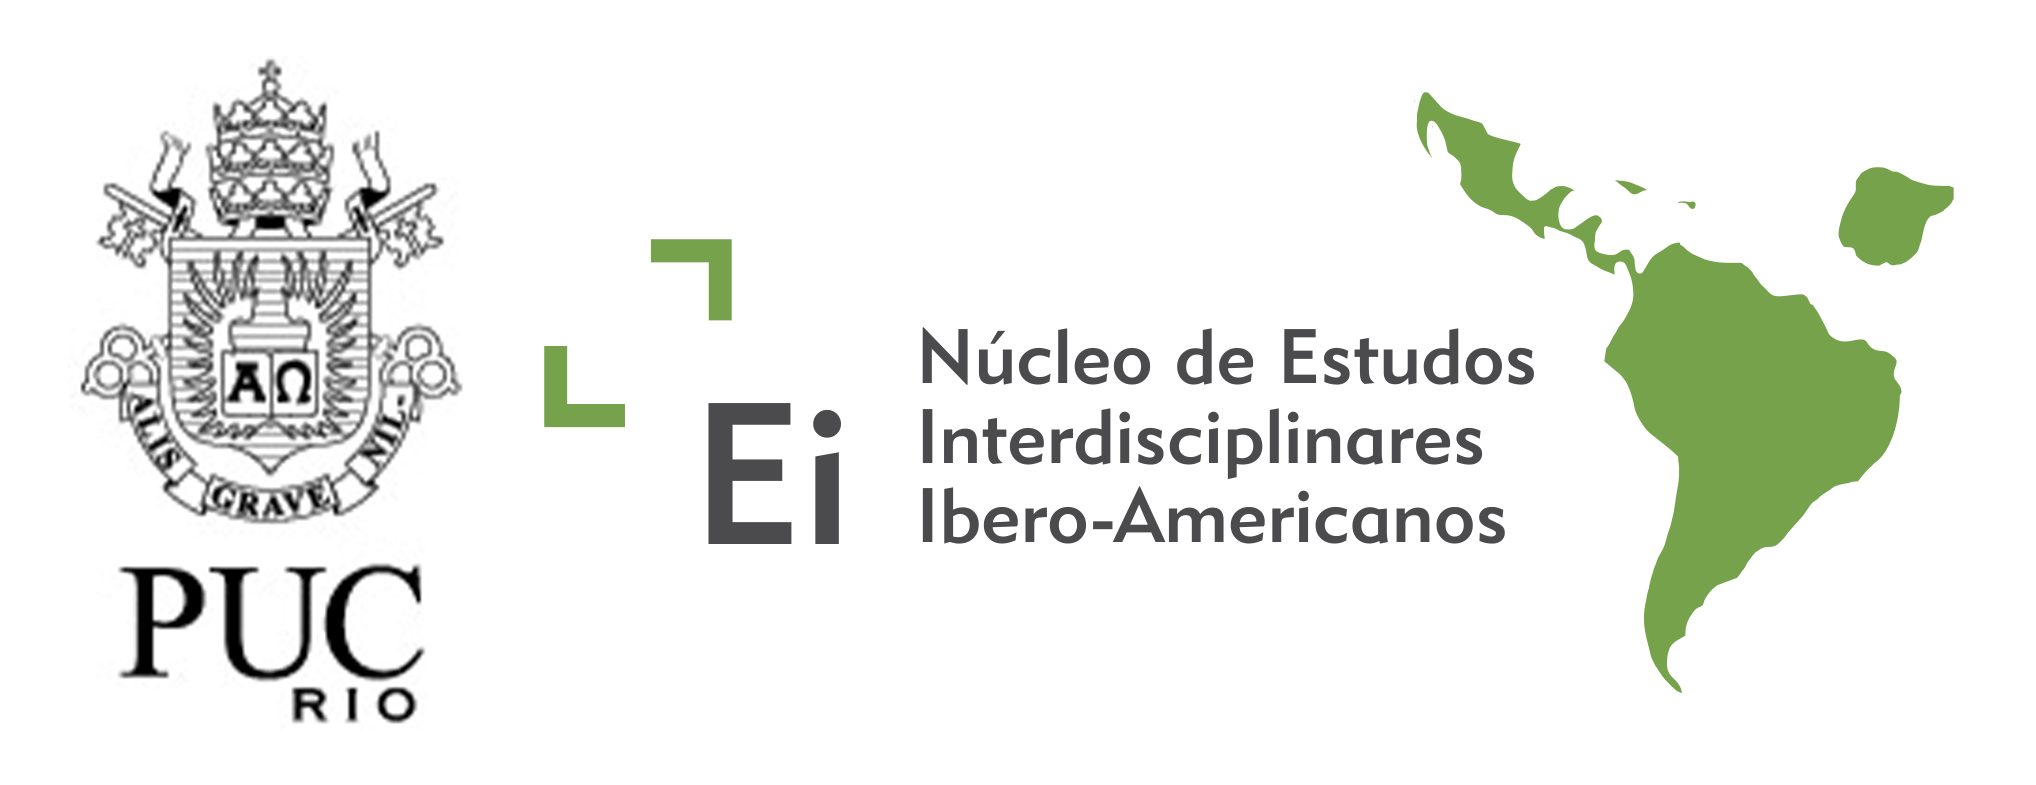 Núcleo de Estudos Interdisciplinares Ibero-Americanos